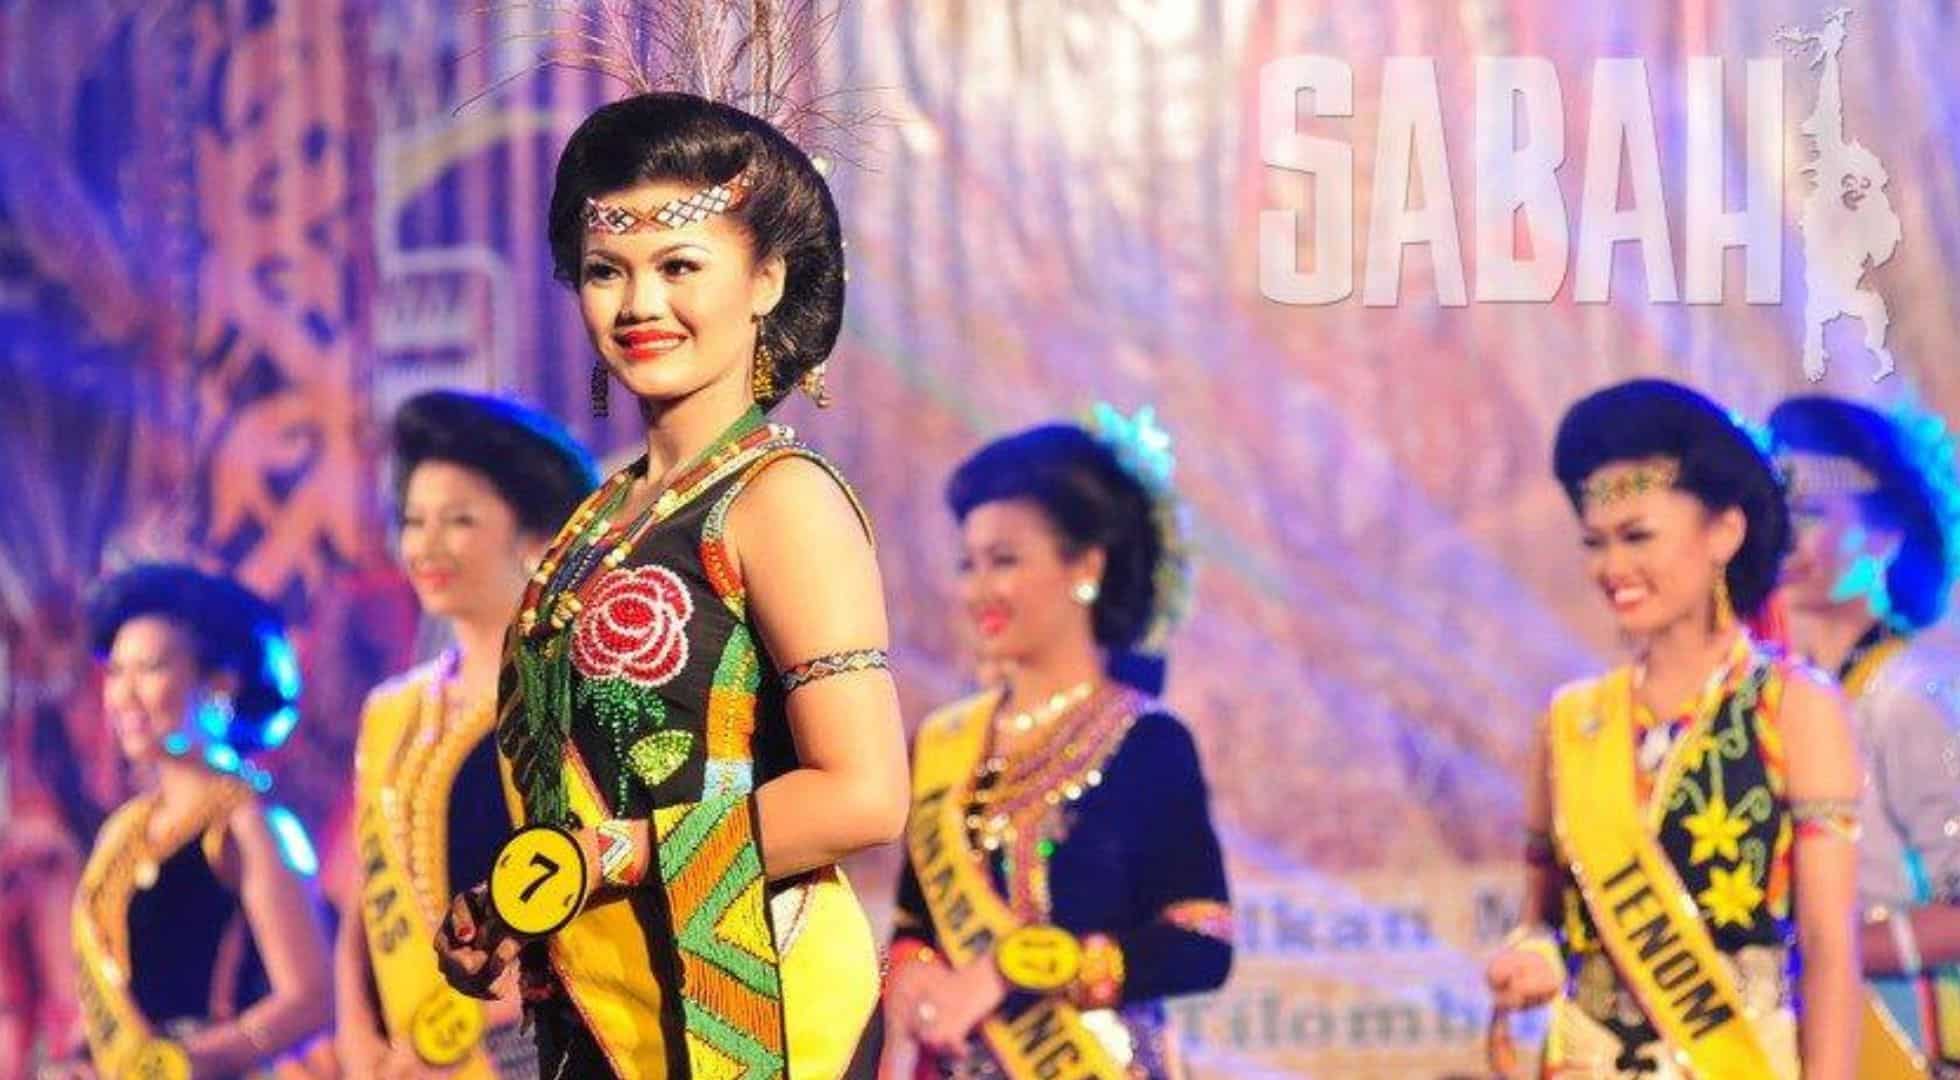 Festival panen di Malaysia yang menampilkan kontes kecantikan 